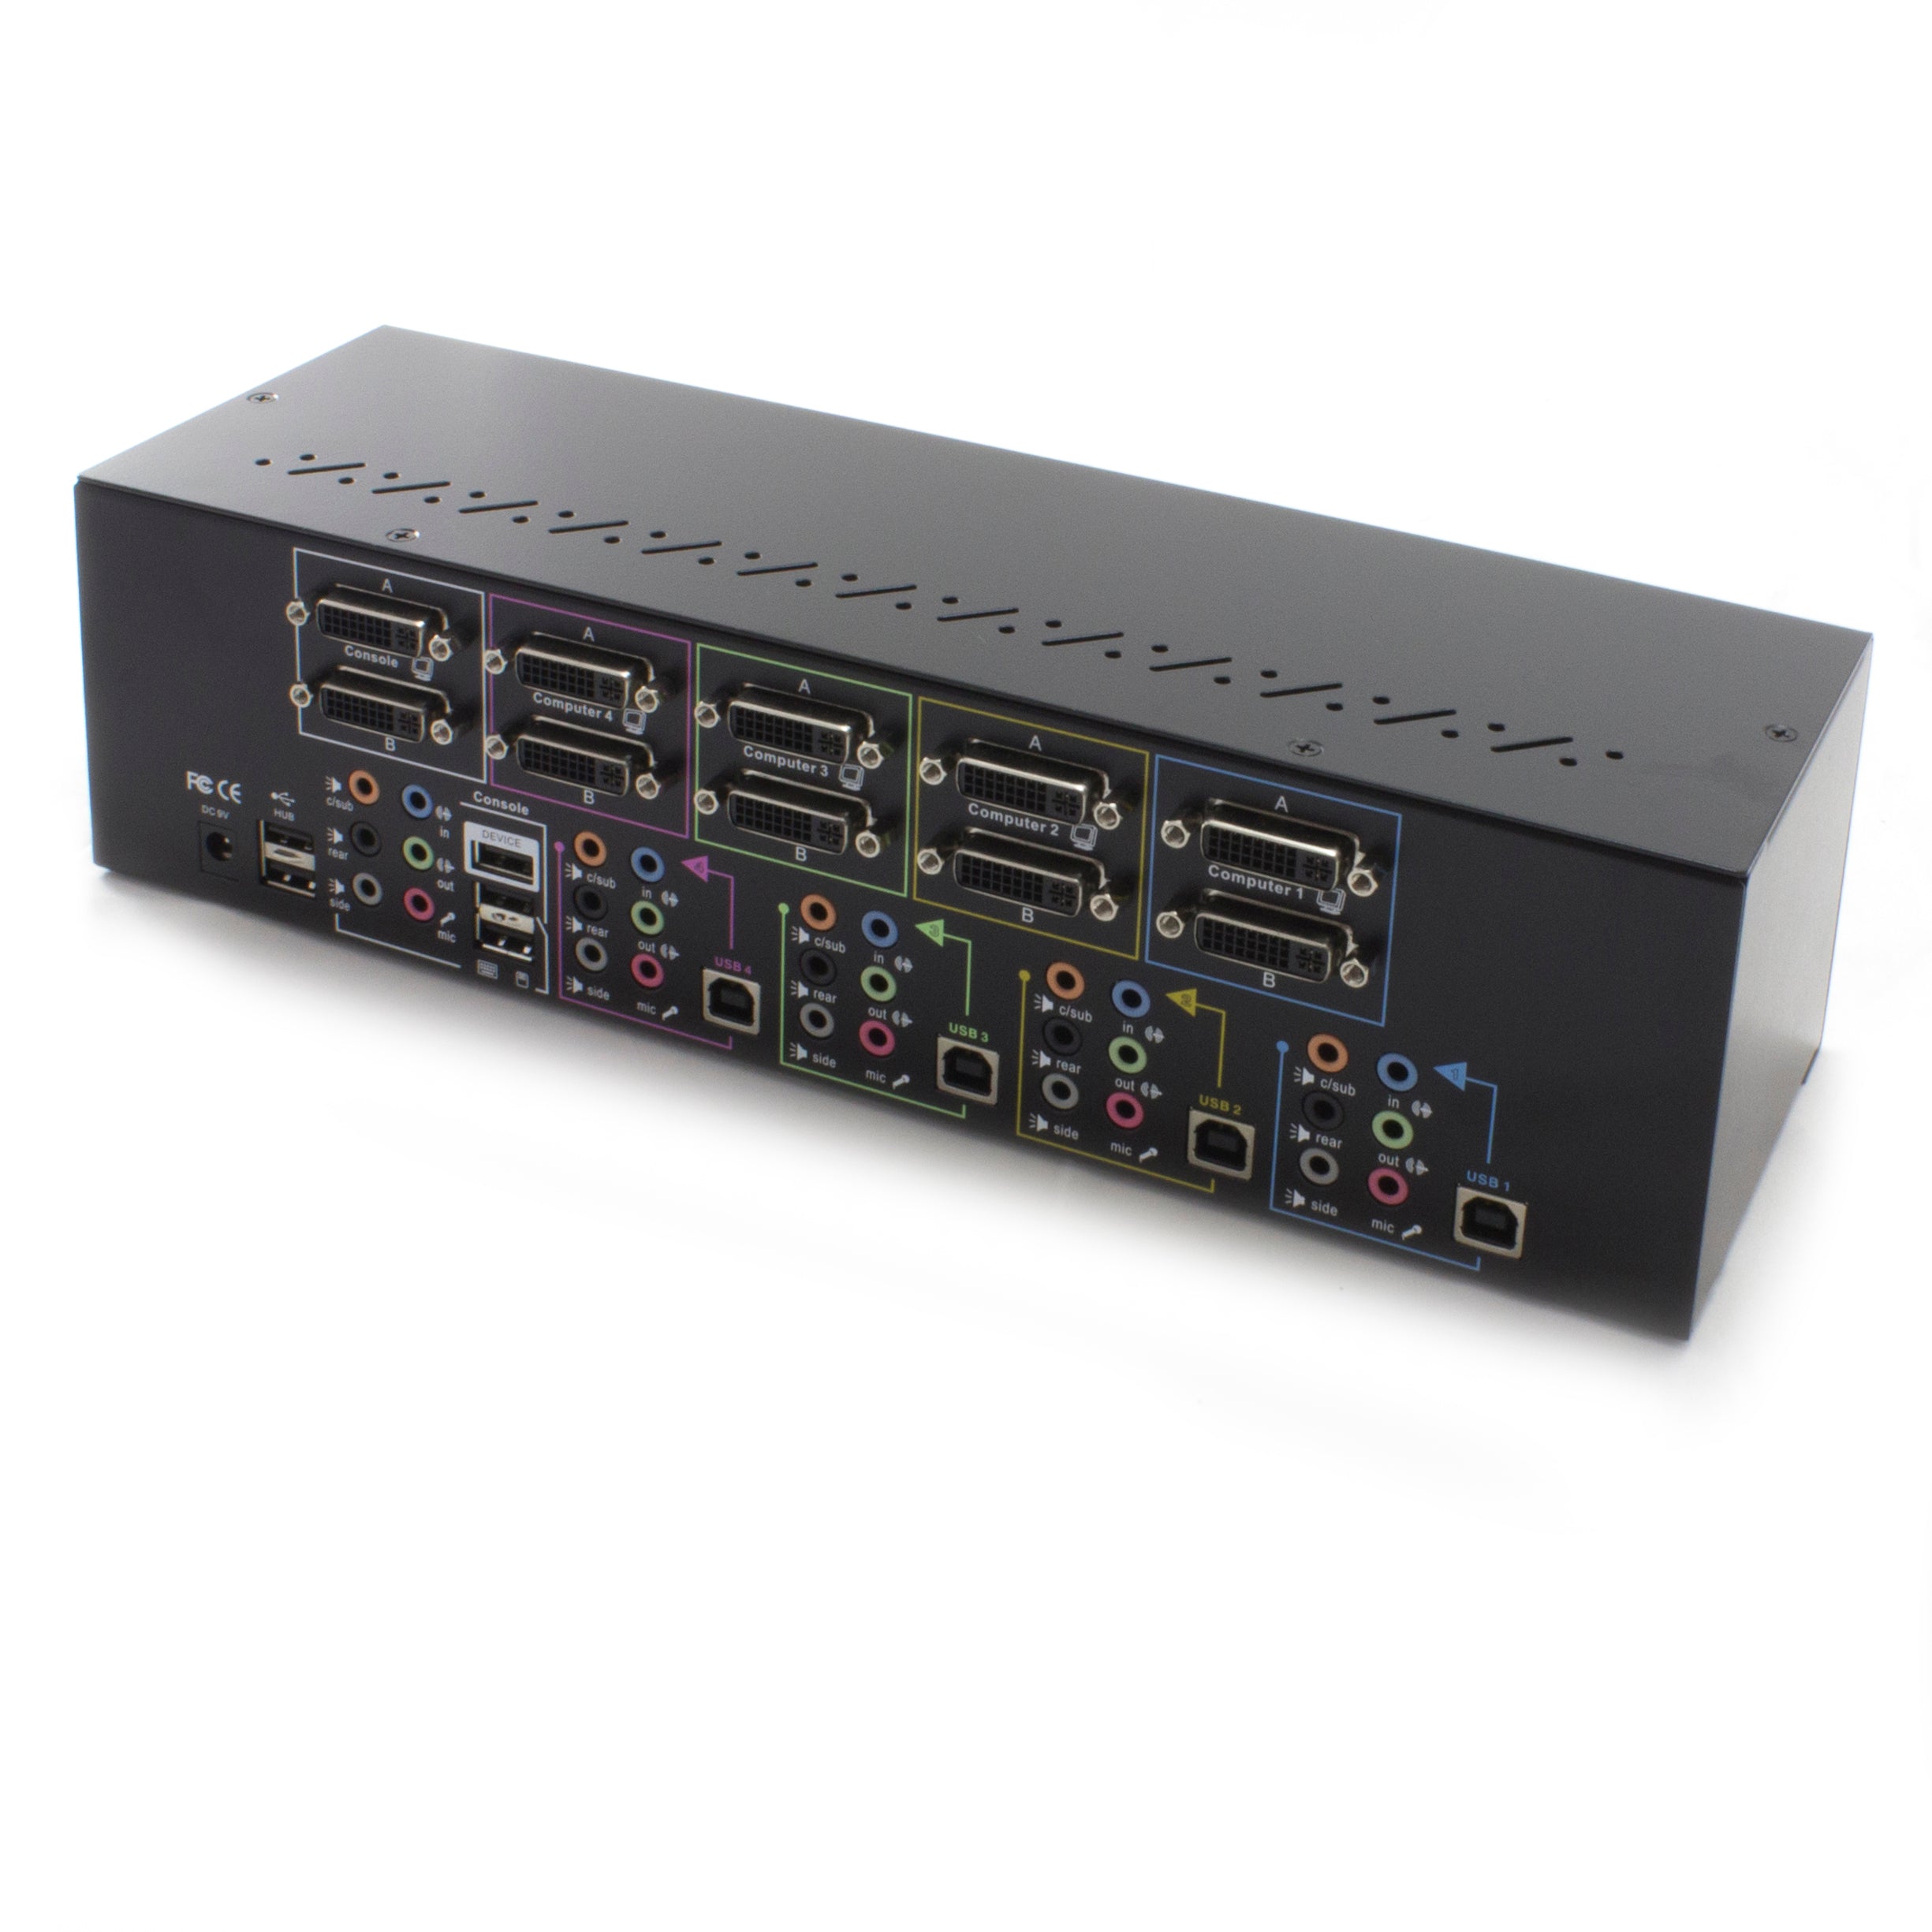 Serveredge 4-Port Dual Monitors DVI USB KVM Switch w/ 7.1 Ch. Sound